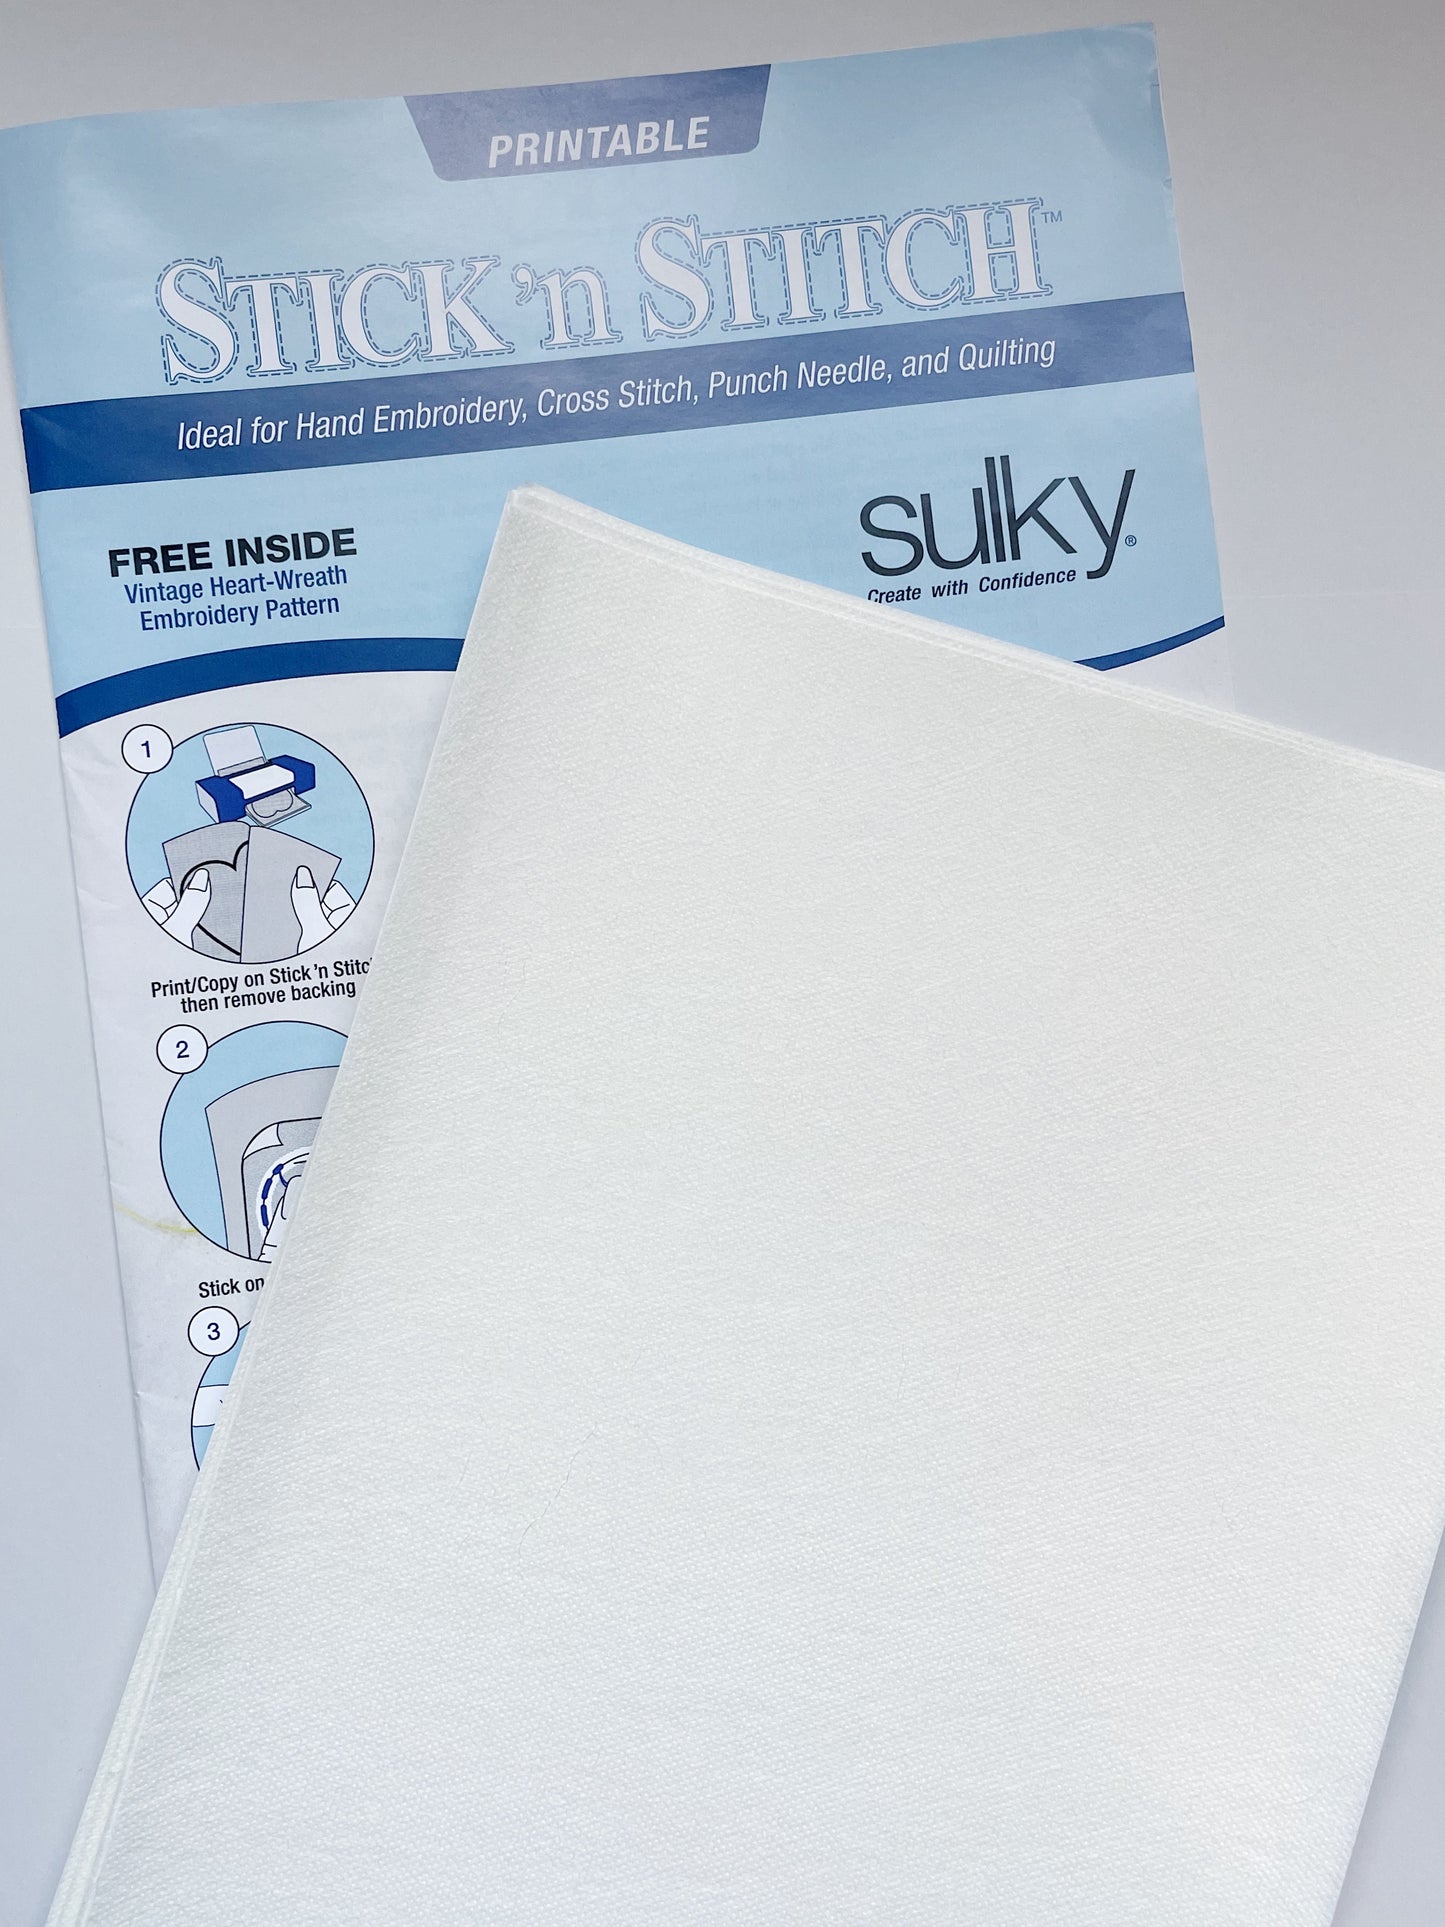 Sulky Paper Solvy 8.5" x 11" Stick ‘n Stitch sheets